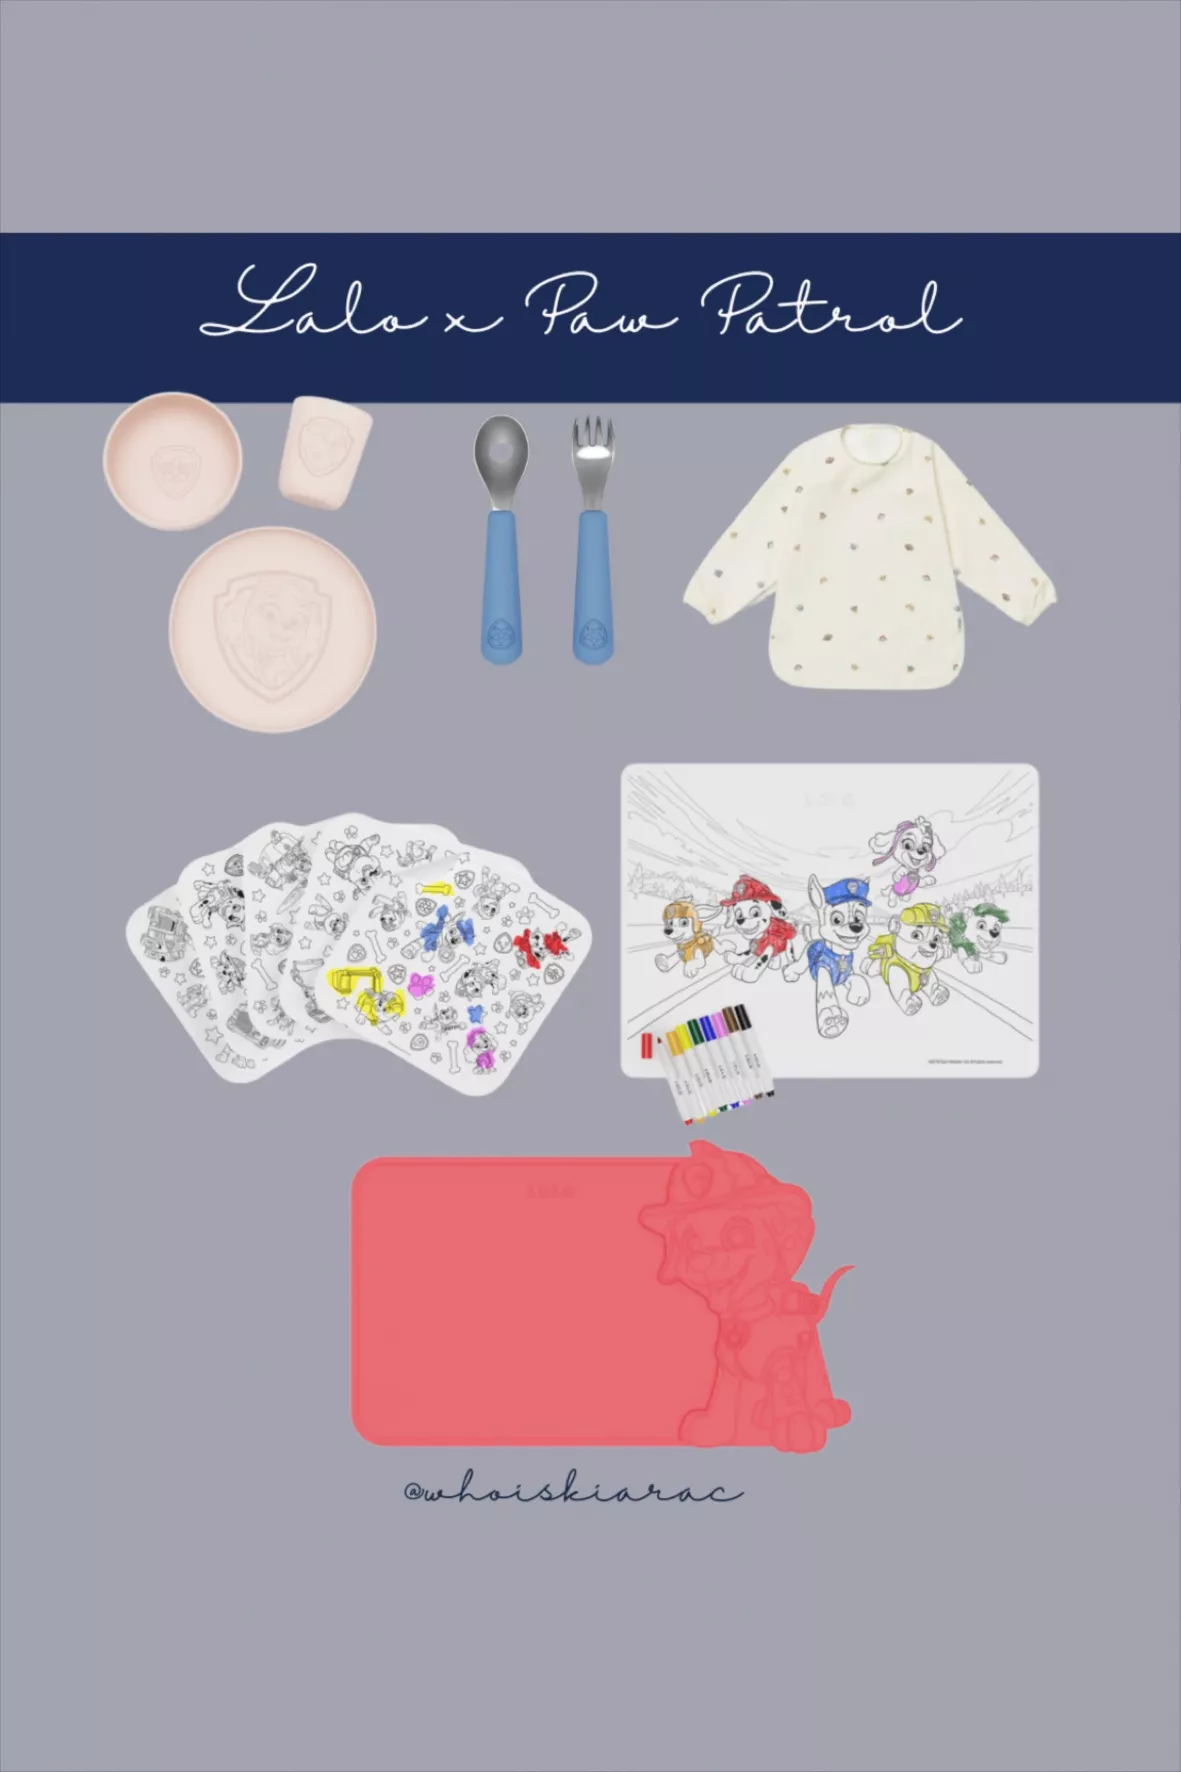 Paris Hilton Clean Ceramic™ … curated on LTK